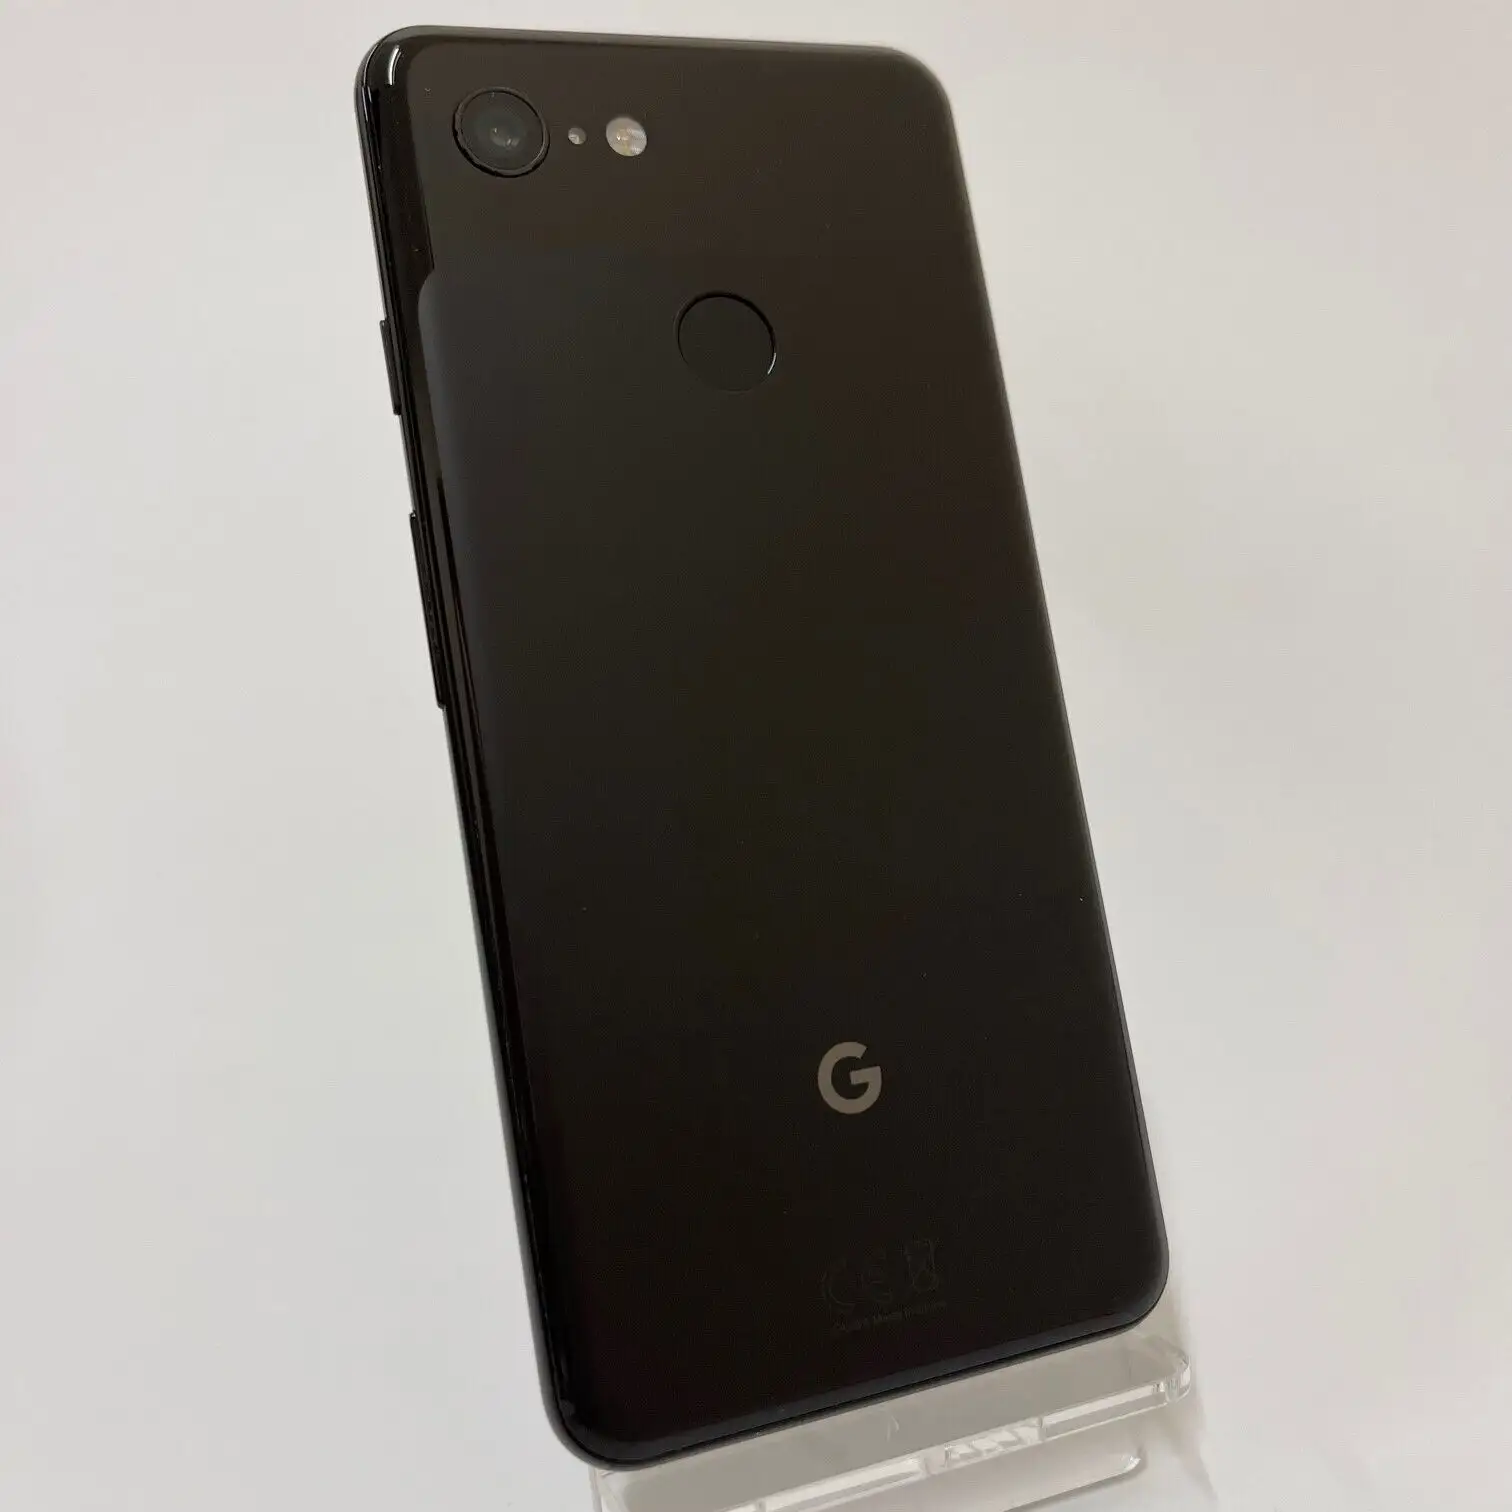 Ponsel asli dengan Goole Store, untuk Google Pixel 2 2xl 3 3xl 3a 3axl 4 4a 4xl 5 5.5 inci 2915mah android 9 Versi Global